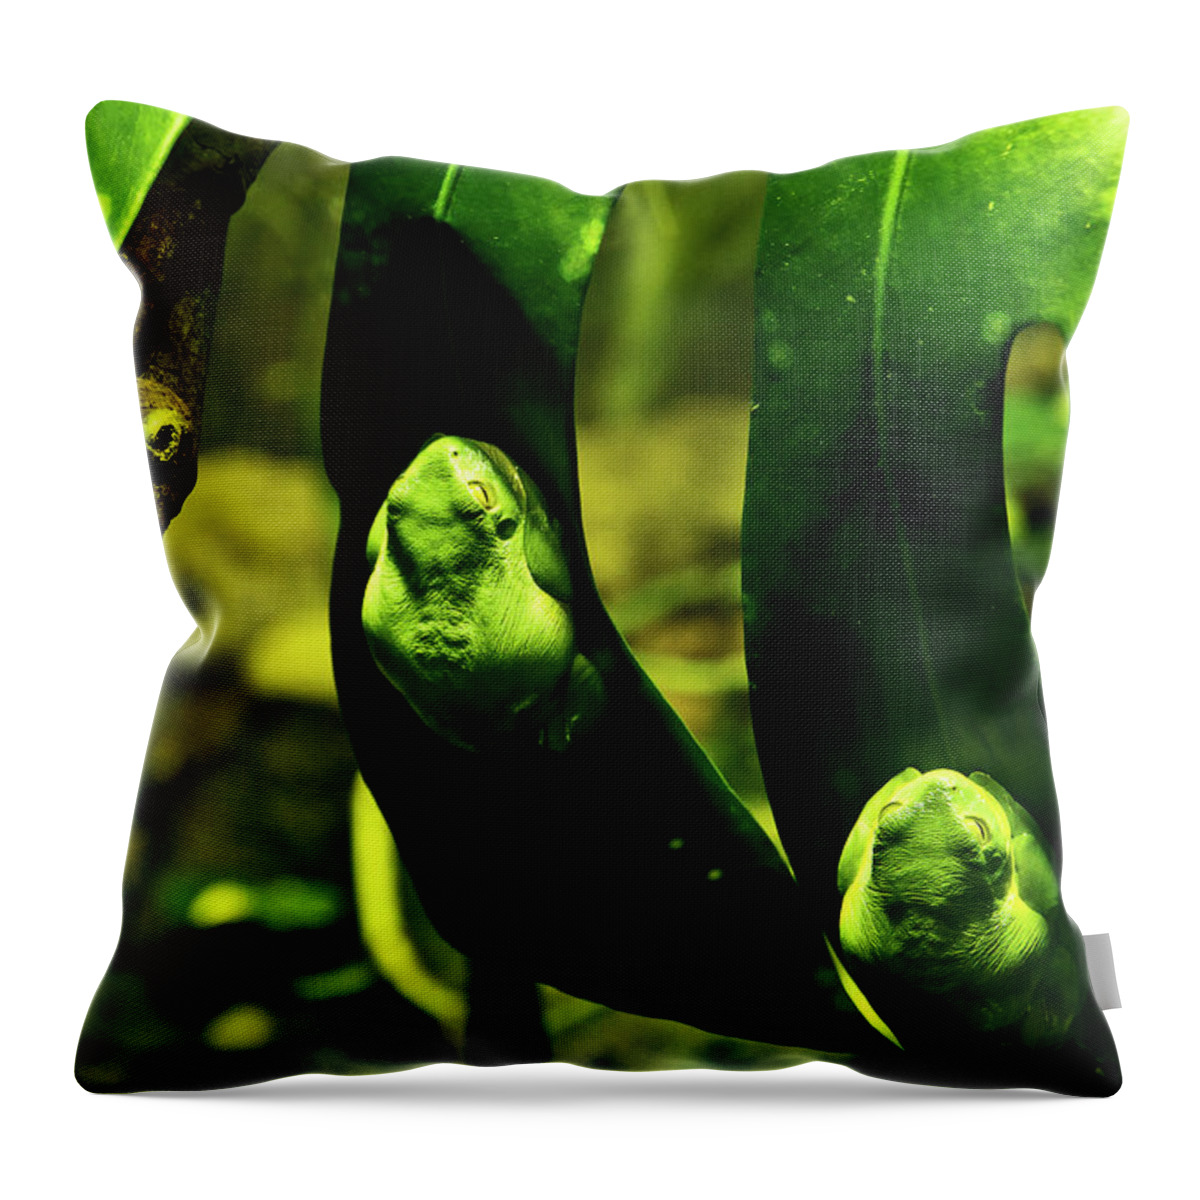 Green Tree Frog Throw Pillow featuring the photograph Green Tree Frog by Miroslava Jurcik